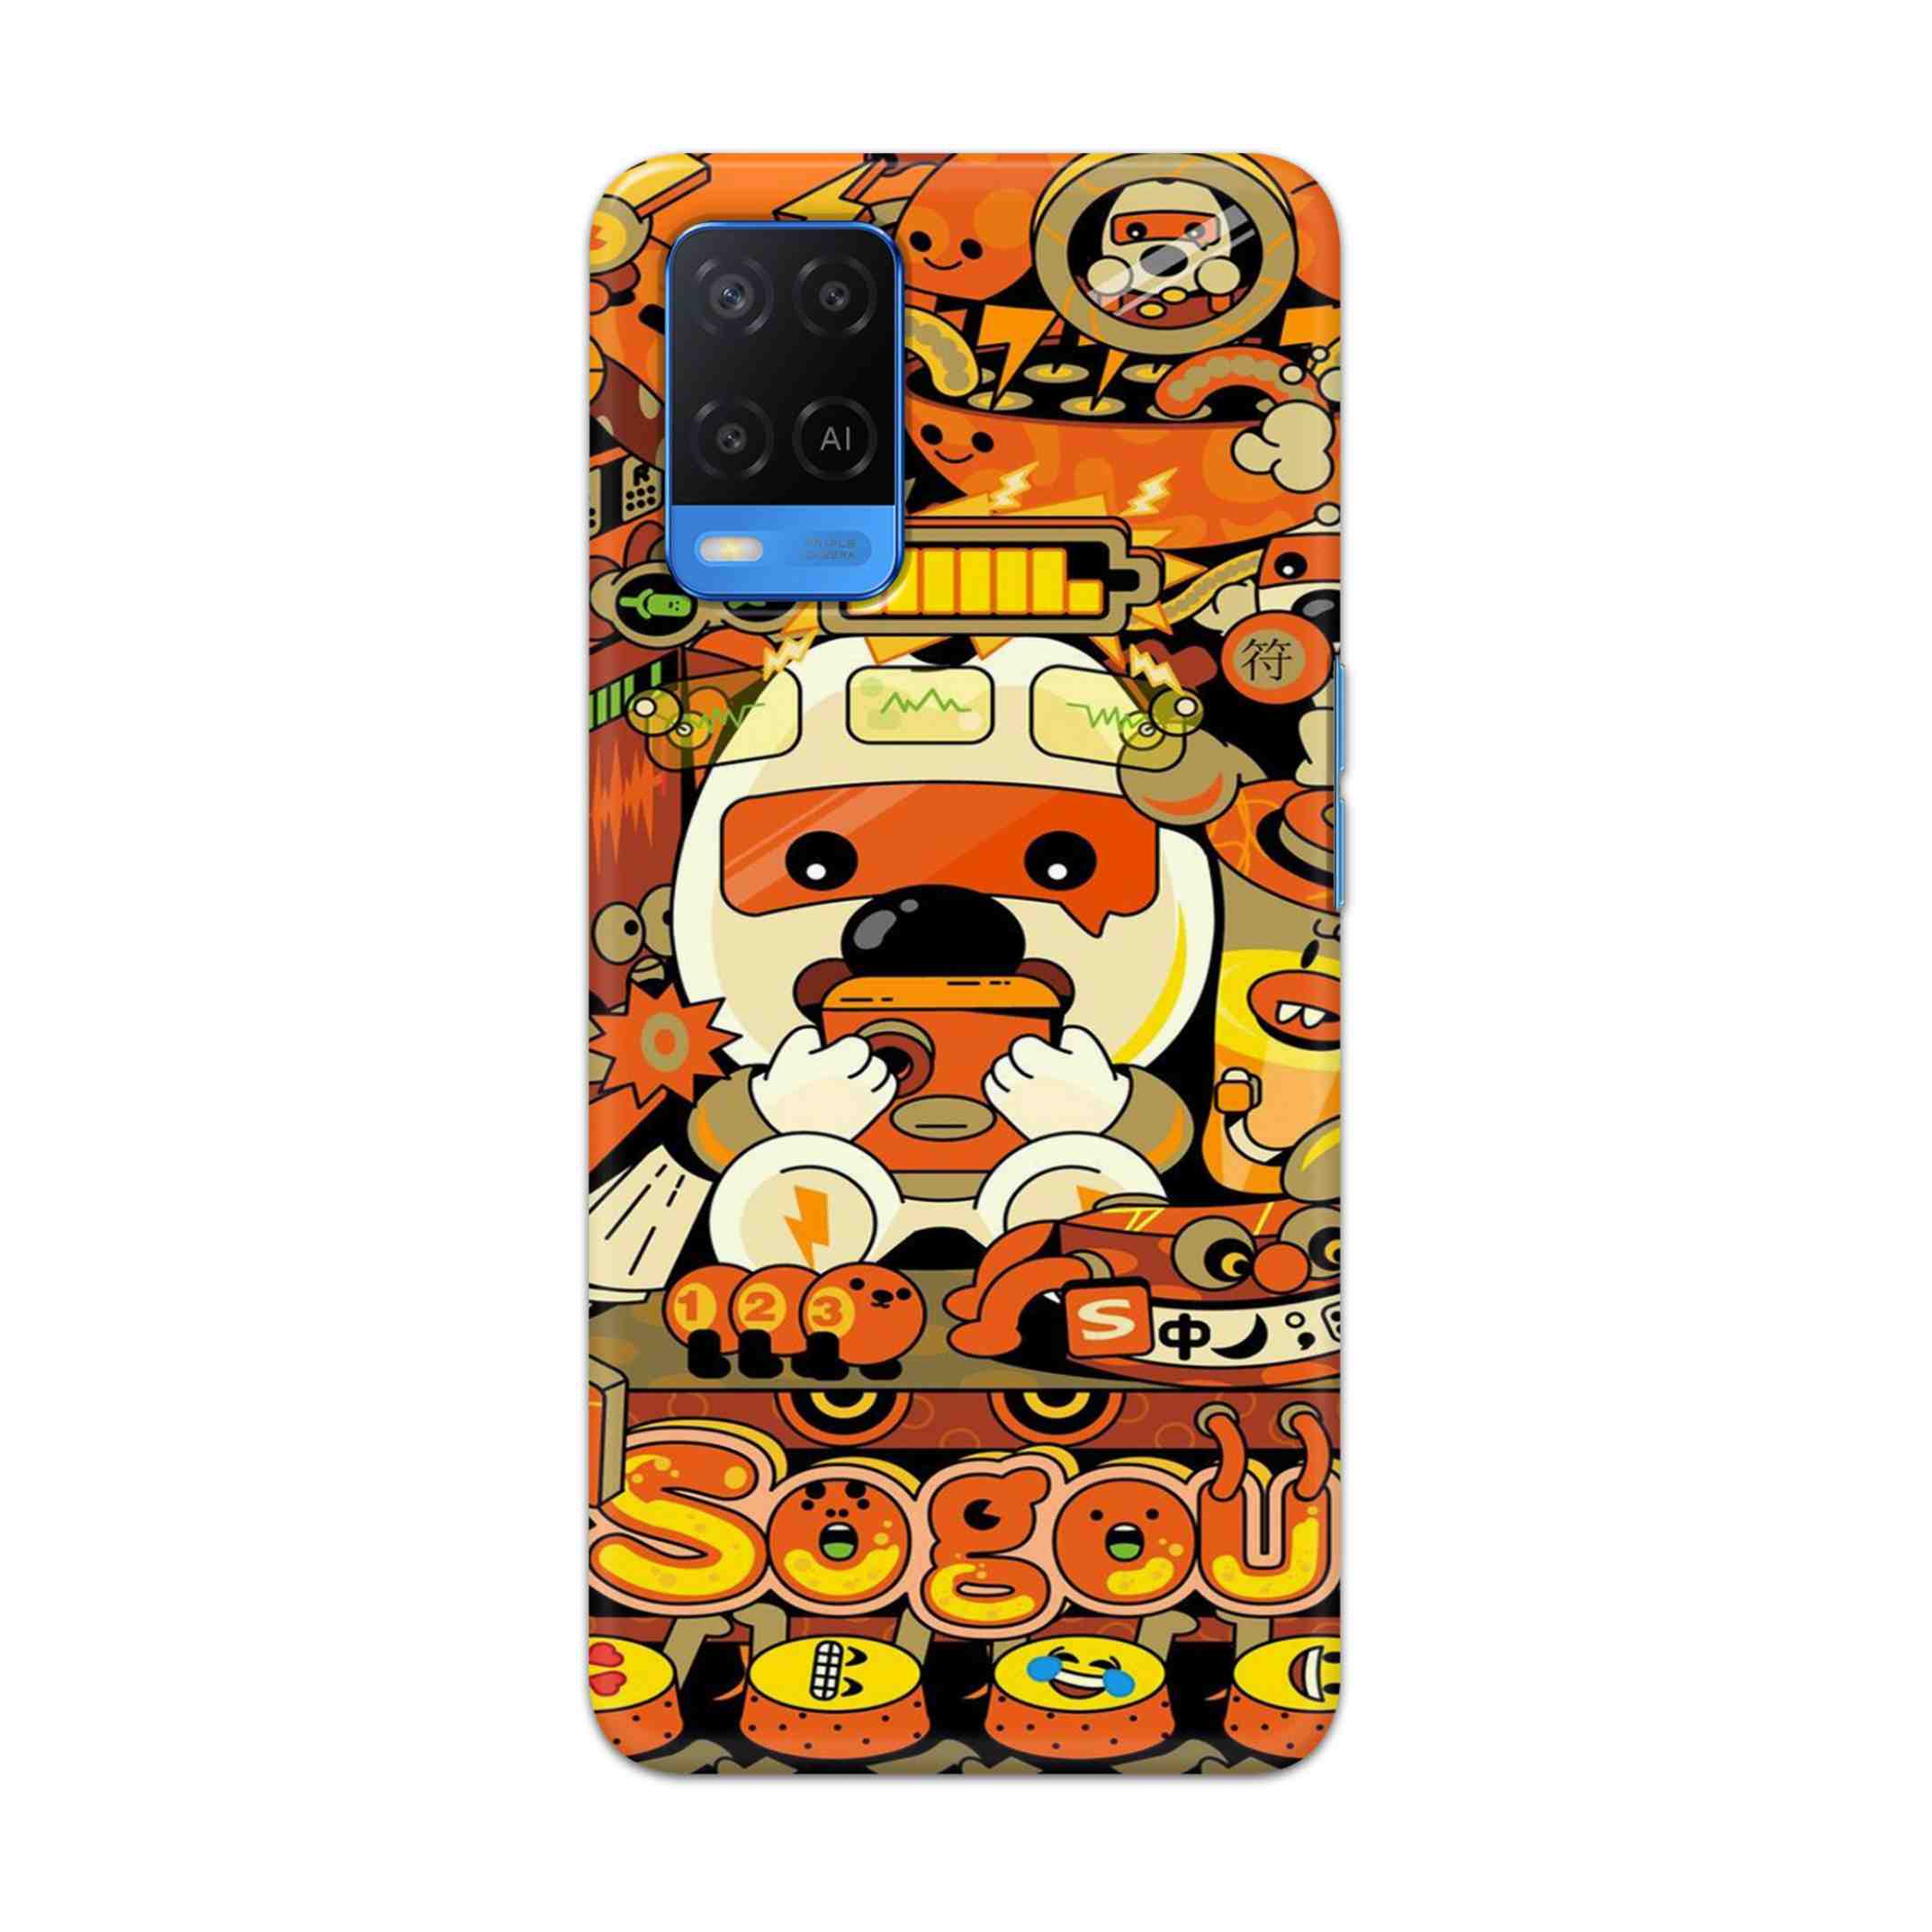 Buy Sogou Hard Back Mobile Phone Case Cover For Oppo A54 (4G) Online